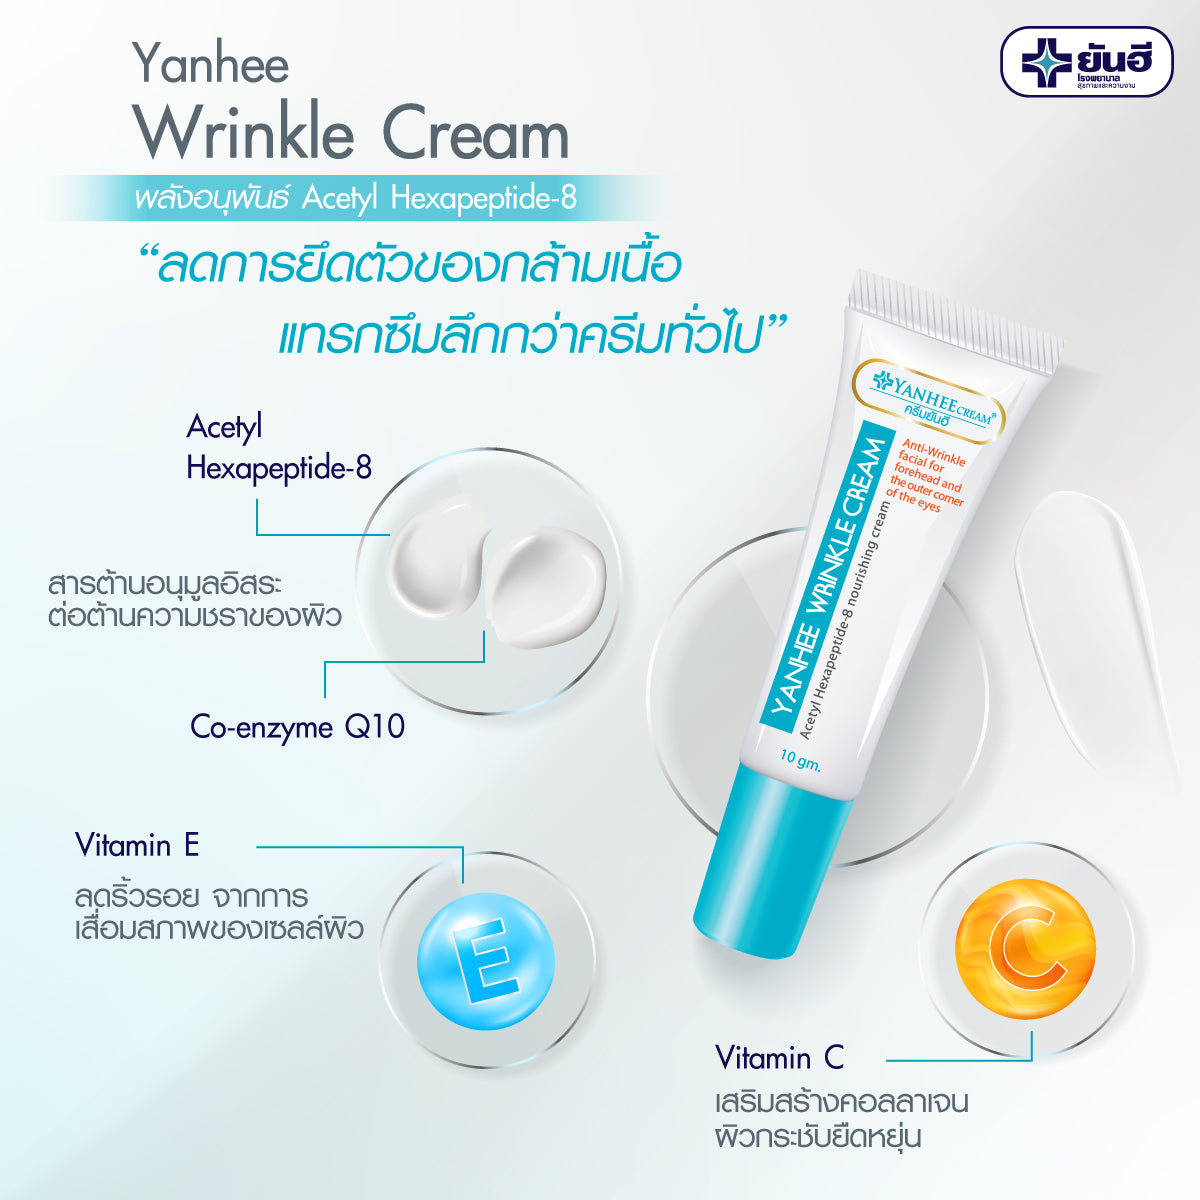 This $8 Anti-Wrinkle Cream Is Popular on